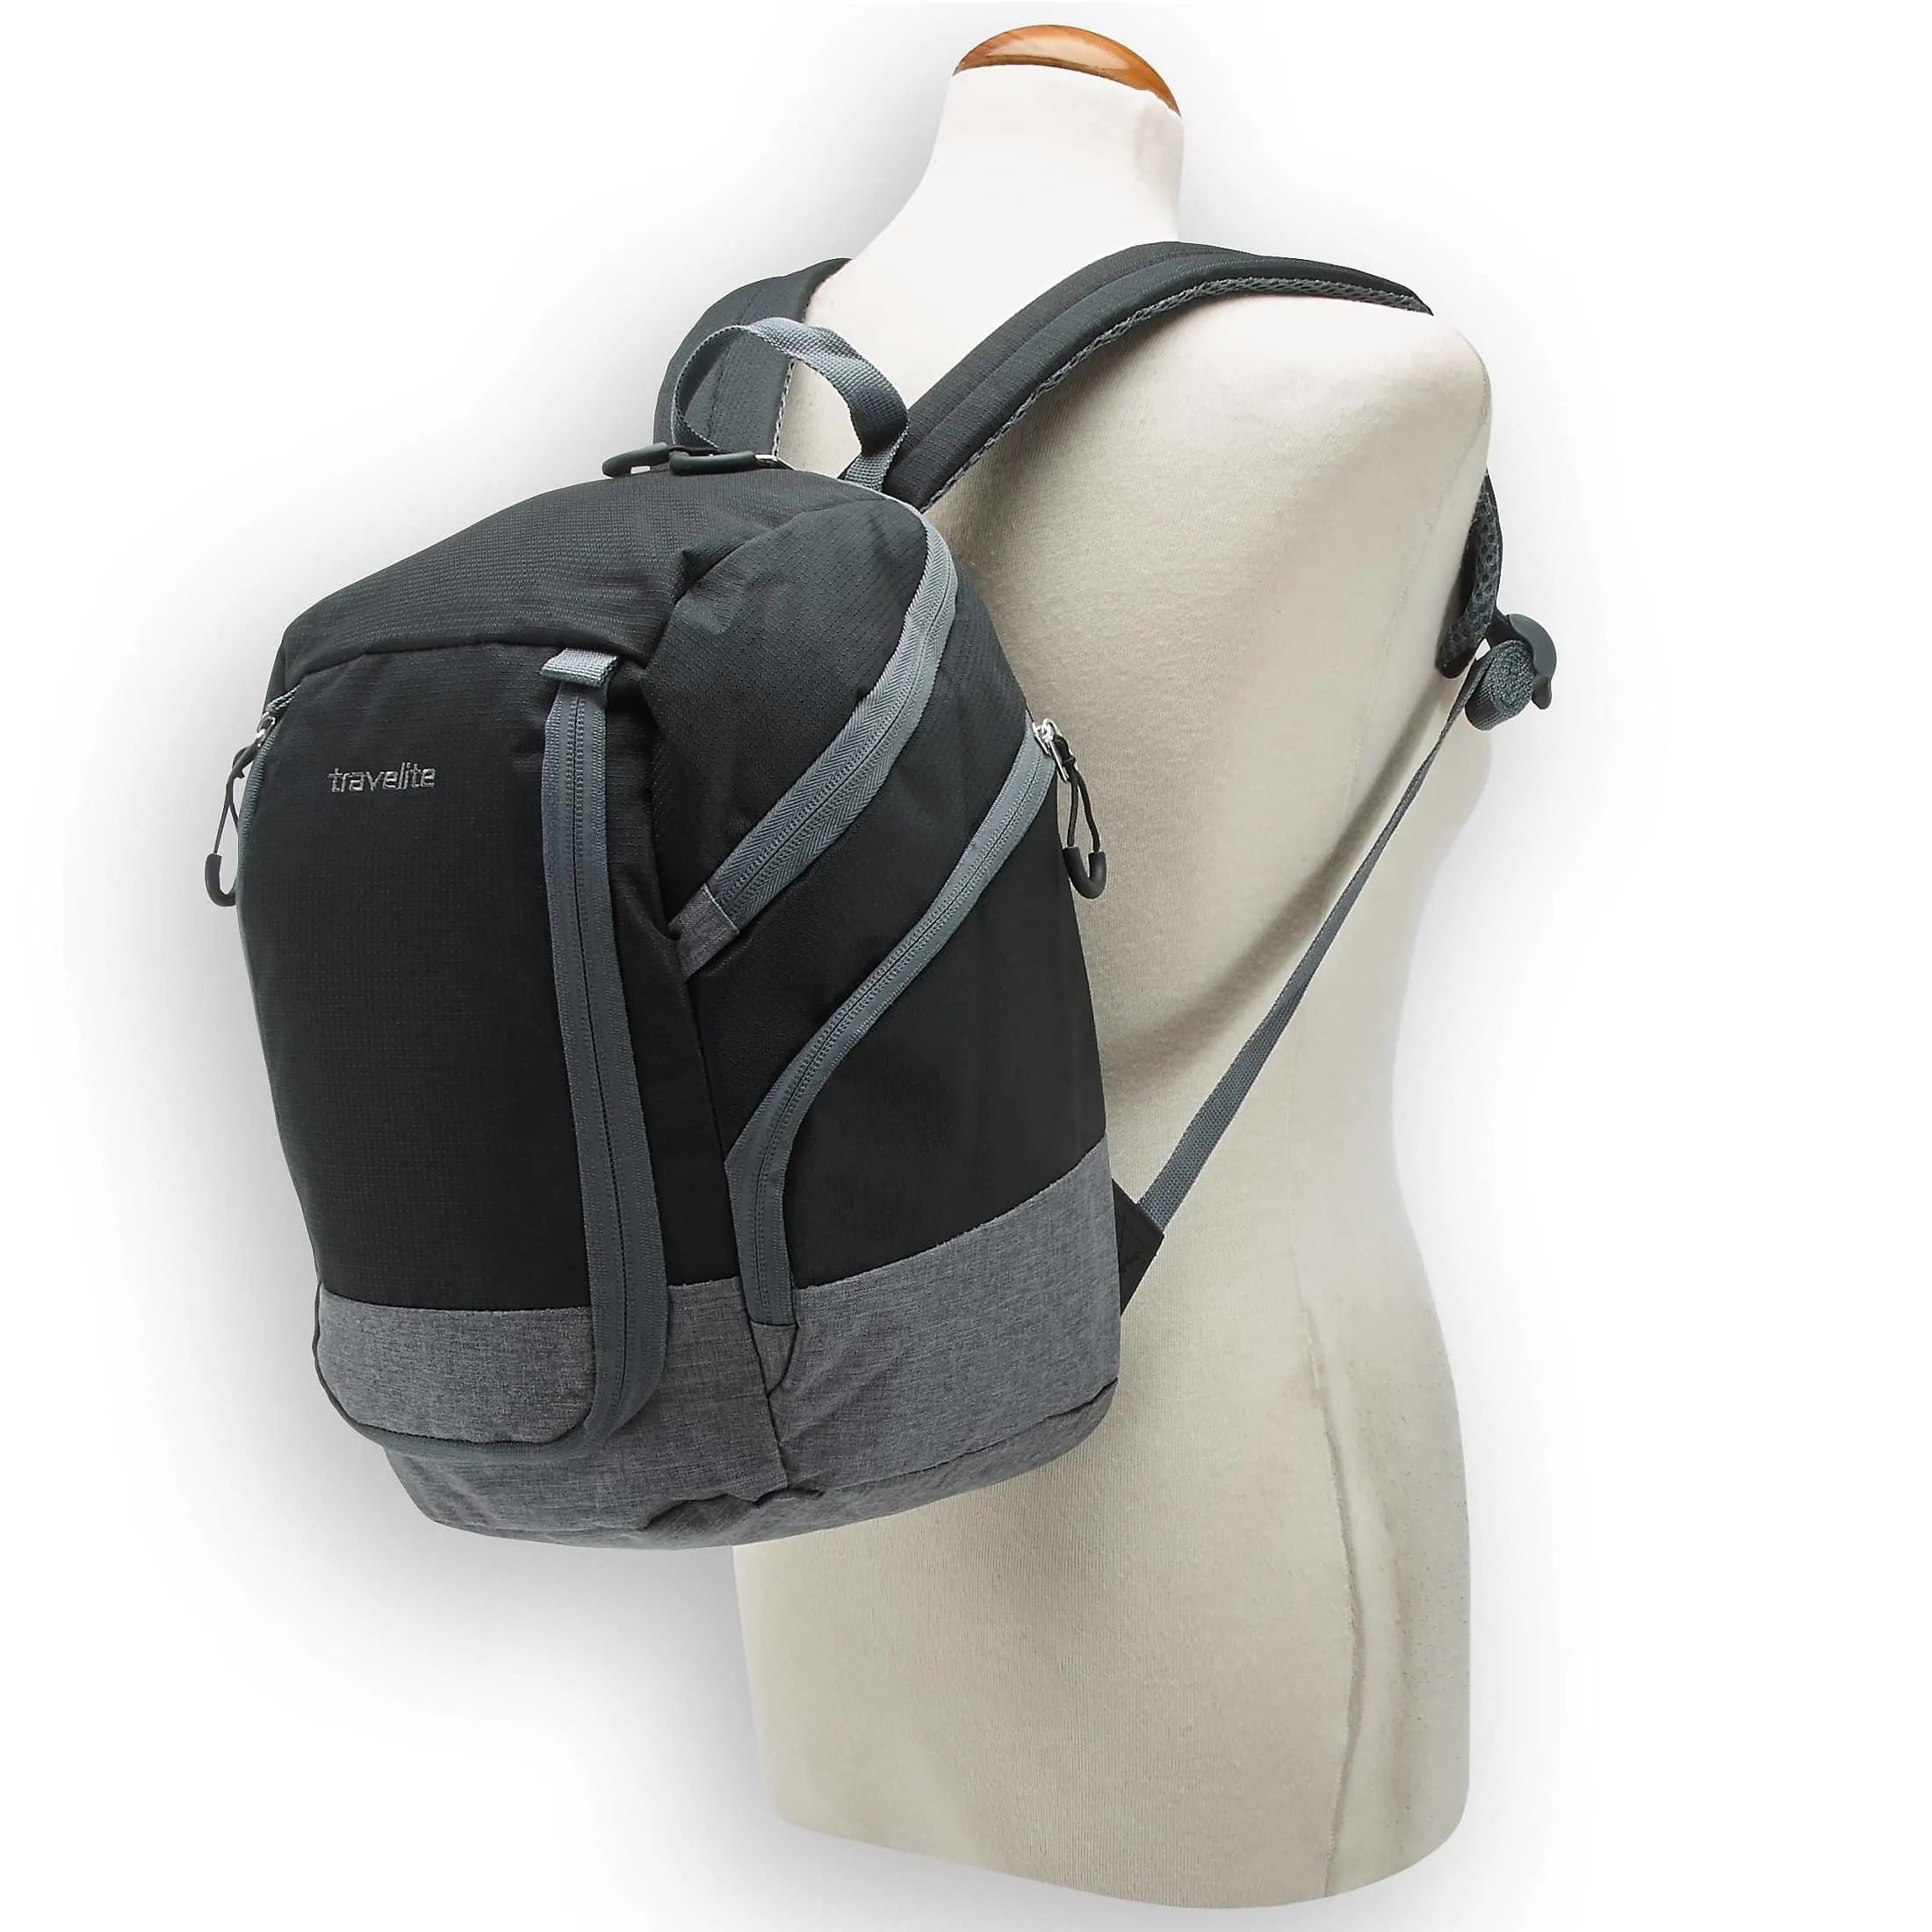 Travelite Basics sac à dos 35 cm - rouge-gris